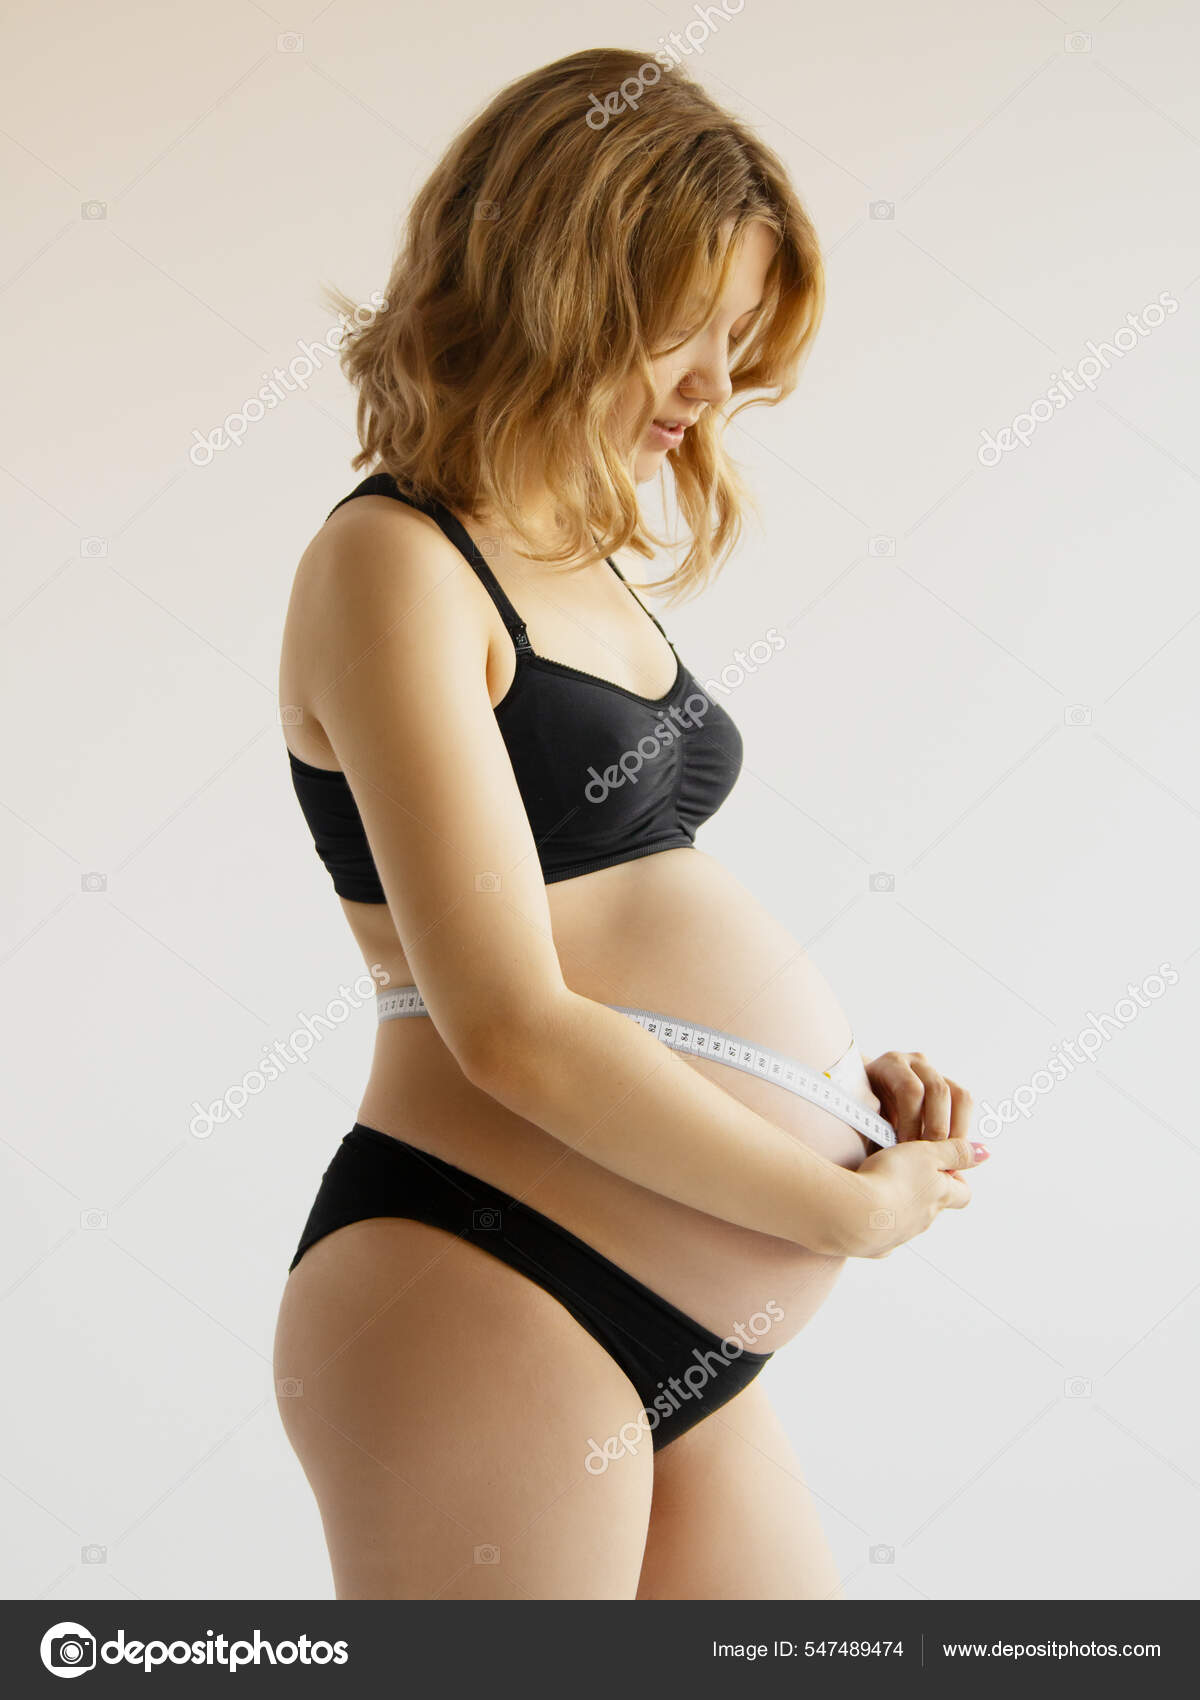 https://st.depositphotos.com/5571152/54748/i/1600/depositphotos_547489474-stock-photo-beautiful-pregnant-young-woman-in.jpg